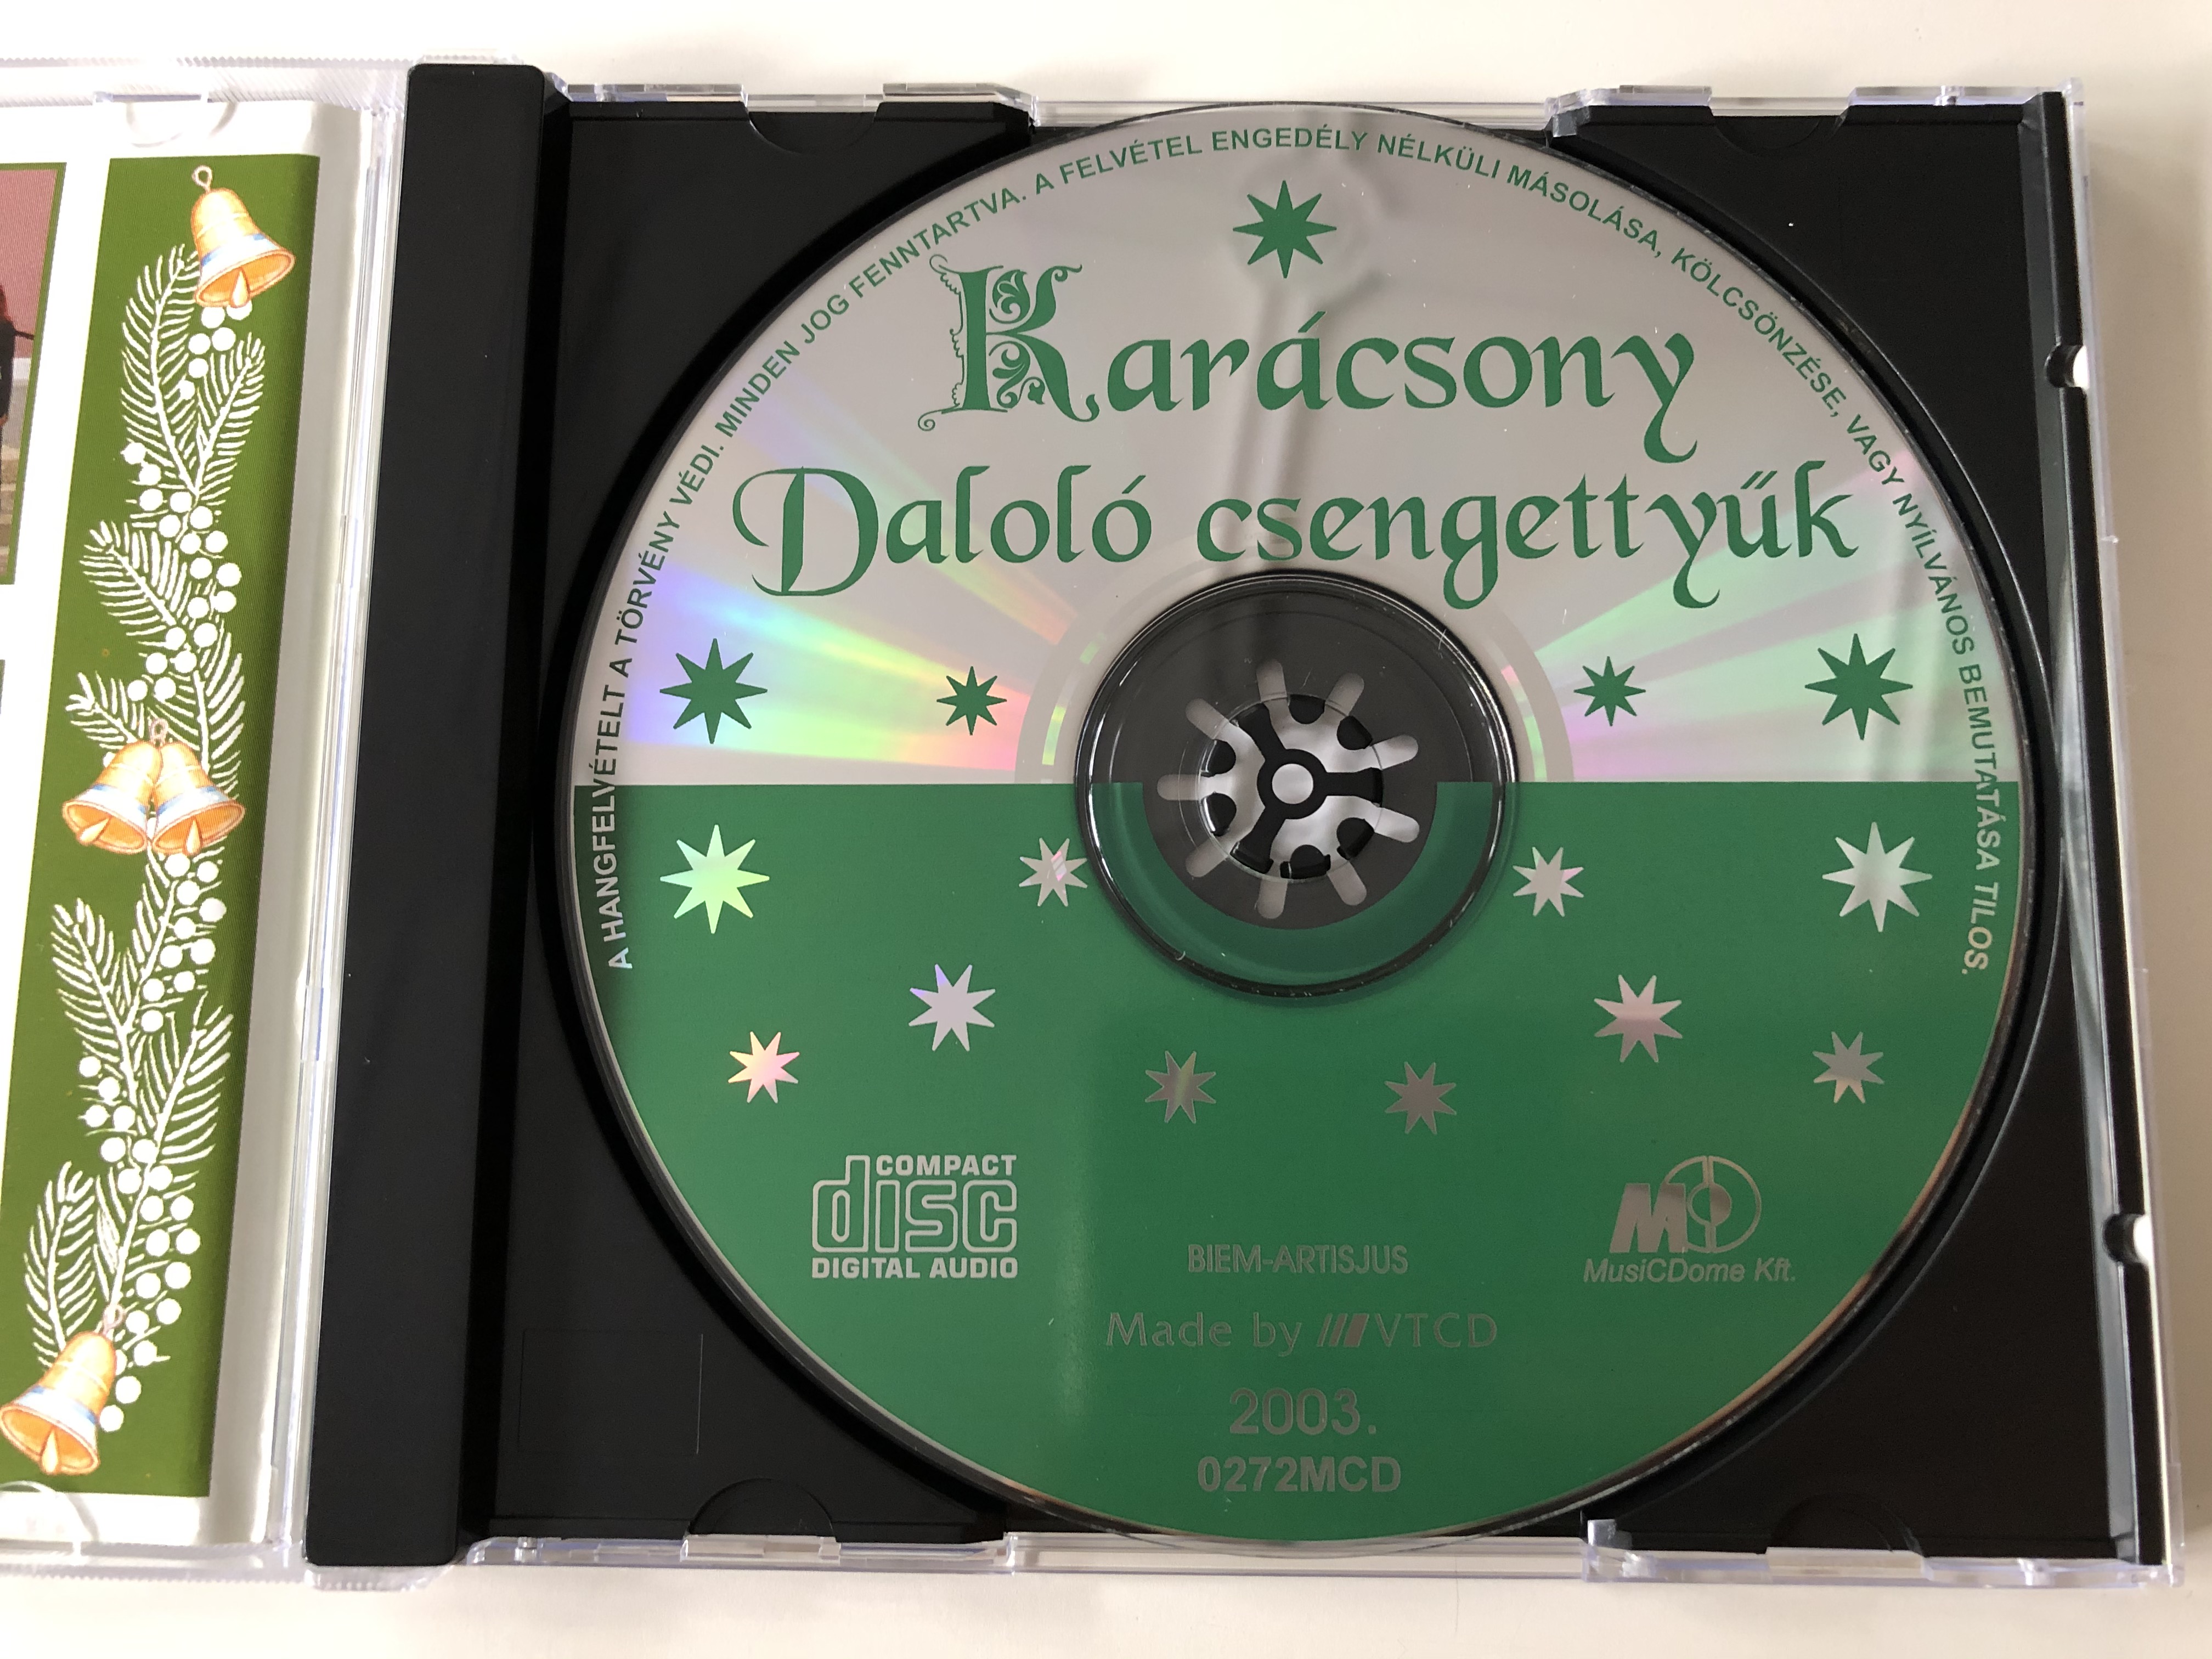 karacsony-dalolo-csengettyuk-a-legismertebb-dalok-musicdome-kft.-audio-cd-2003-0272mcd-3-.jpg